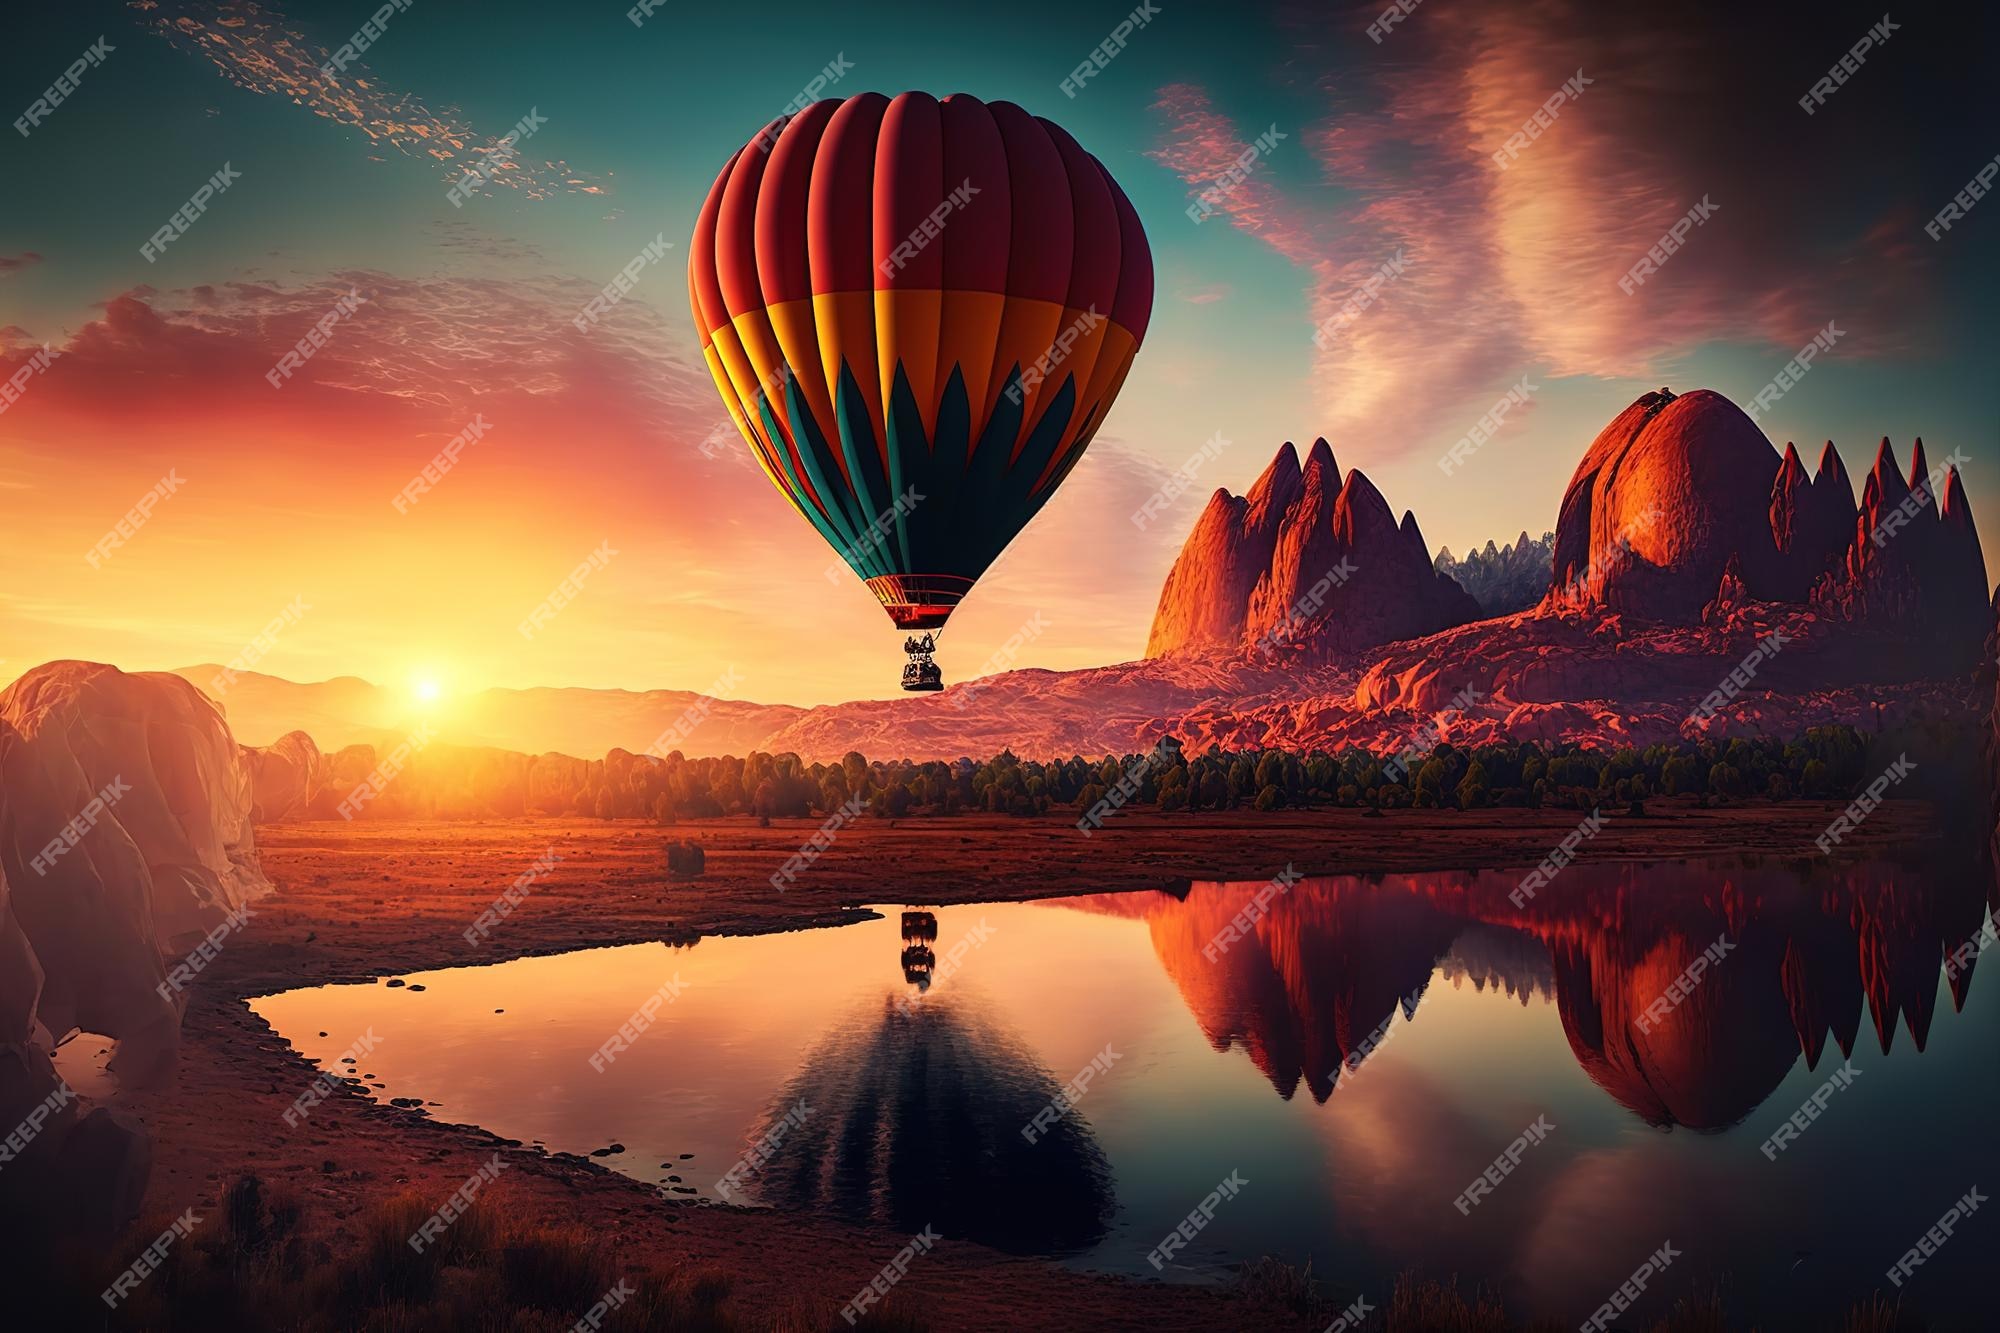 Premium Photo | Hot air balloon at sunset